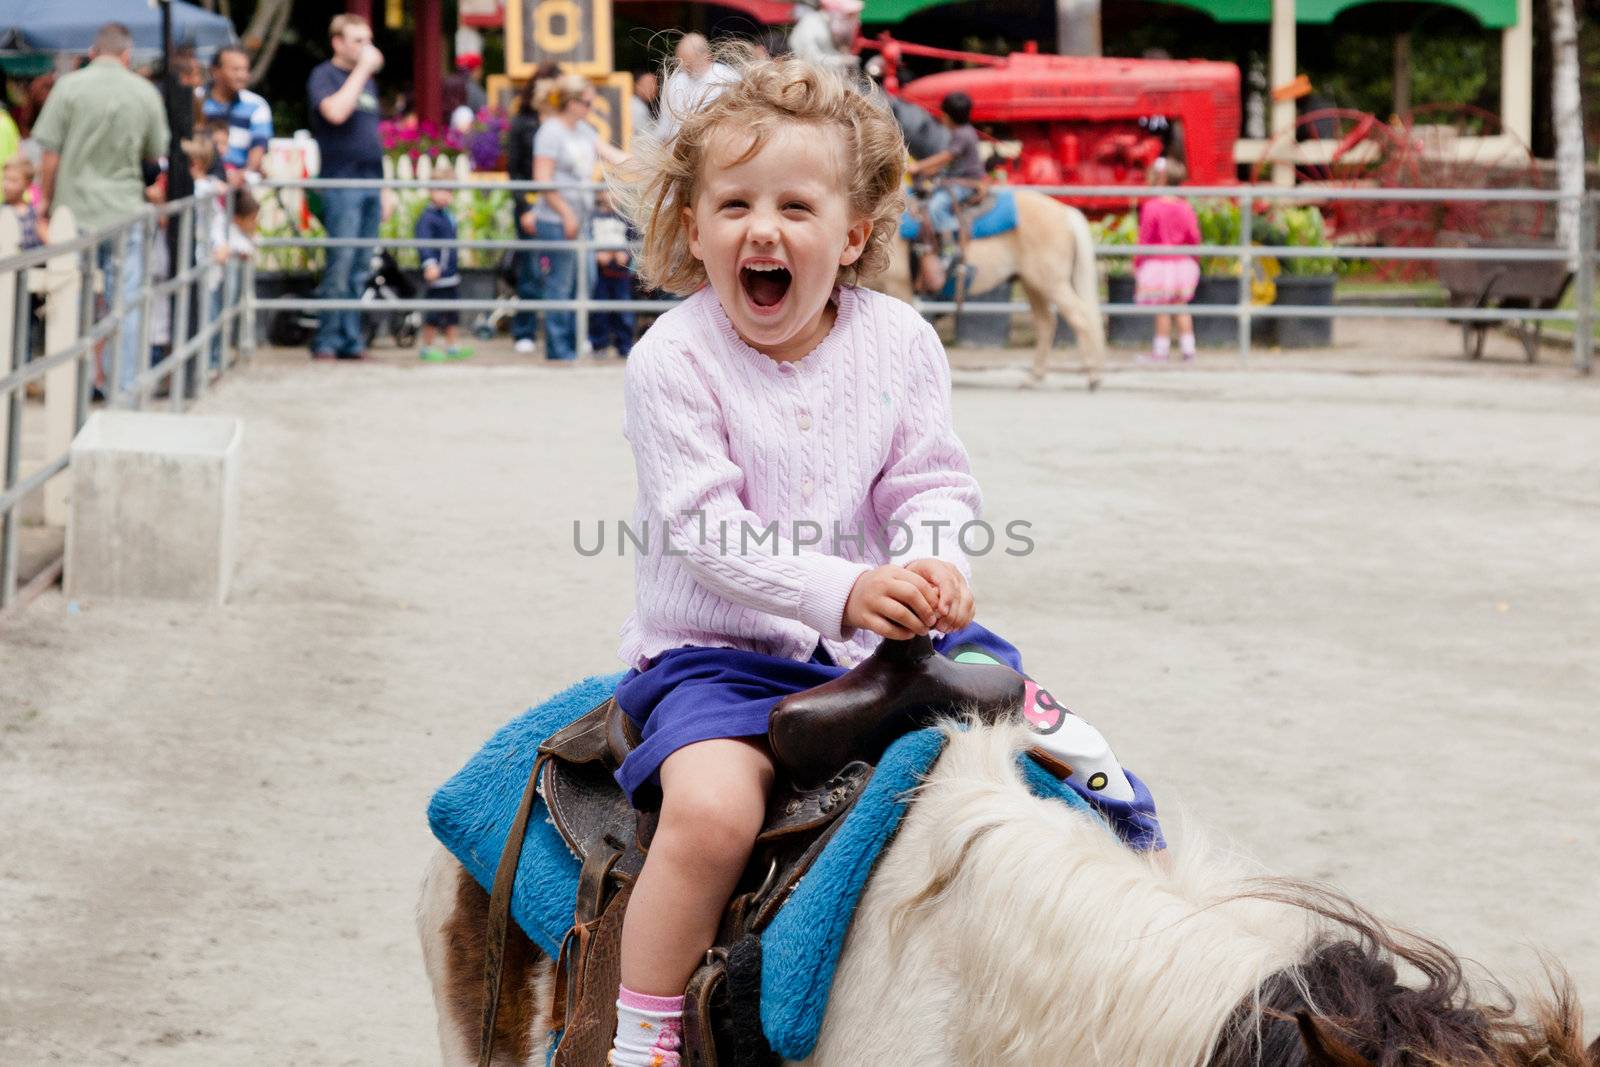 Having lots of fun riding a pony.